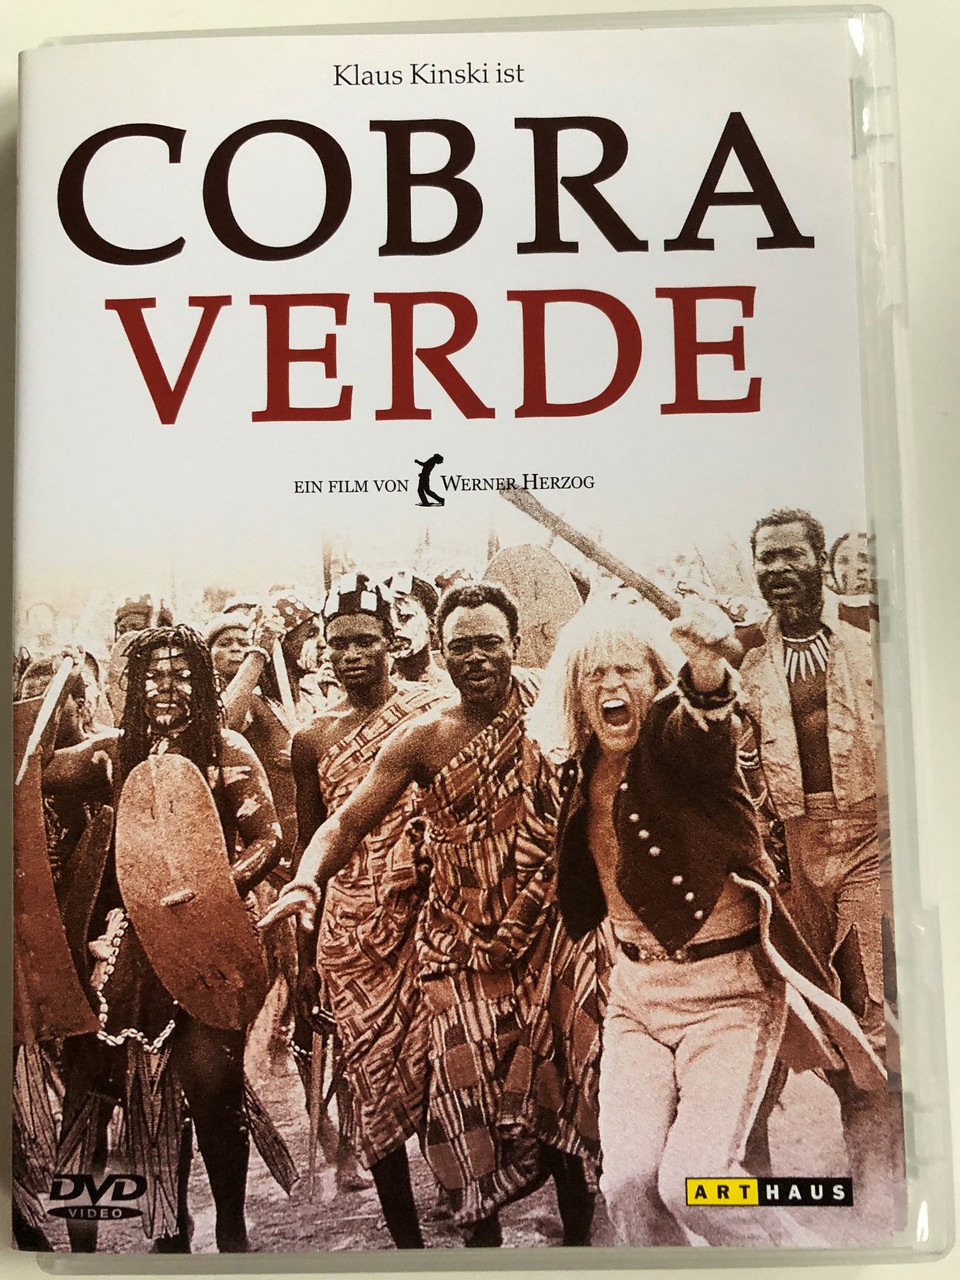 Cobra Verde DVD 1987 Slave Coast / Directed by Werner Herzog / Starring:  Klaus Kinski, King Ampaw, José Lewgoy - bibleinmylanguage